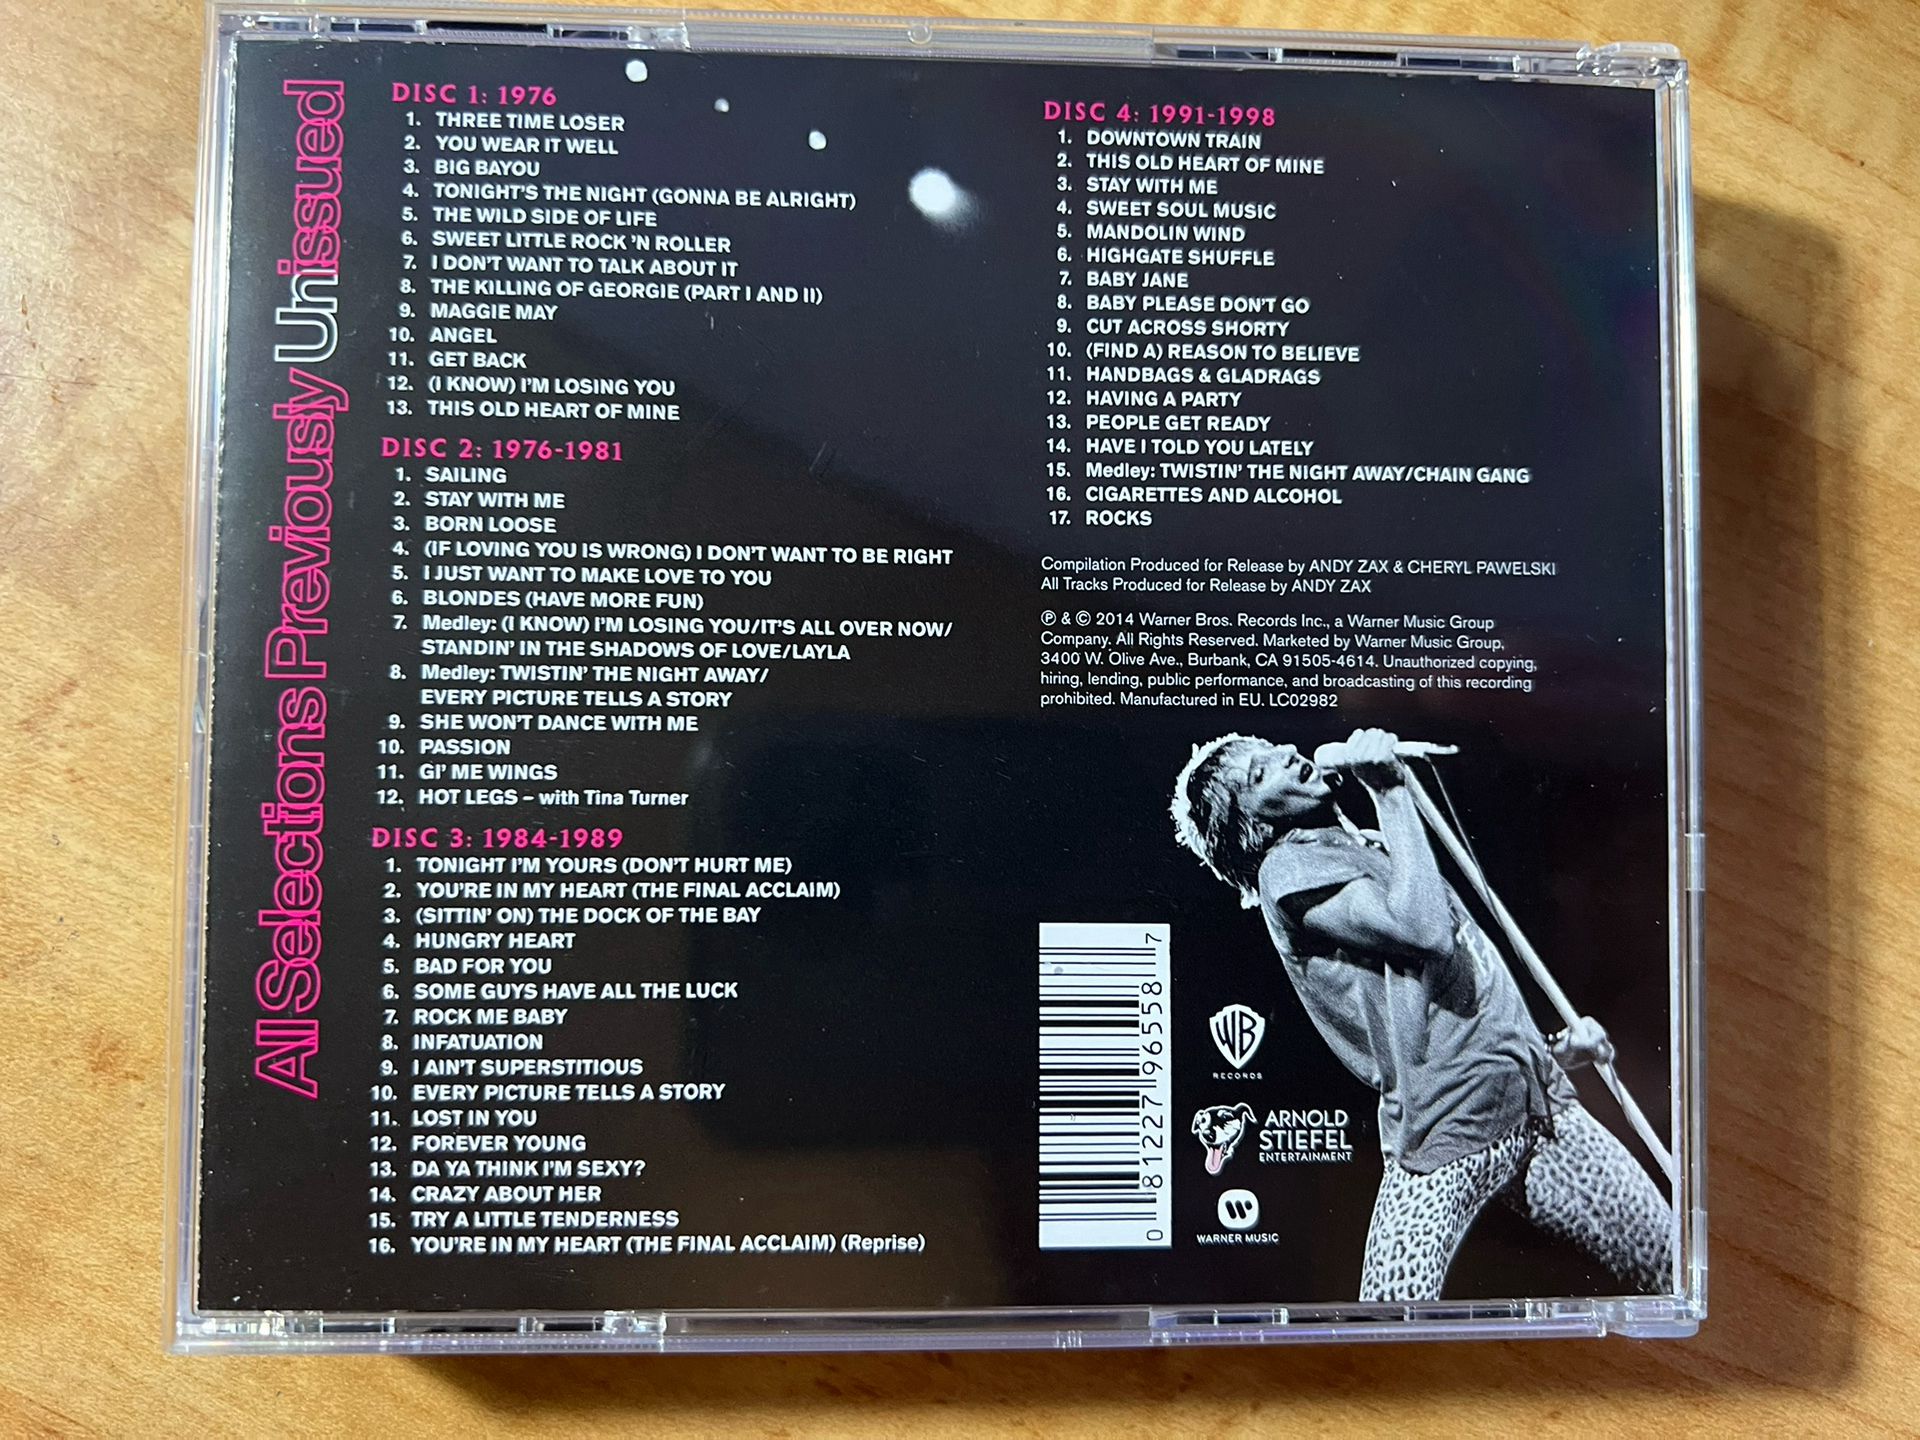 ROD STEWART - Live 1(1976 to 1989): Tonight's the Night - 4 CD **MINT**